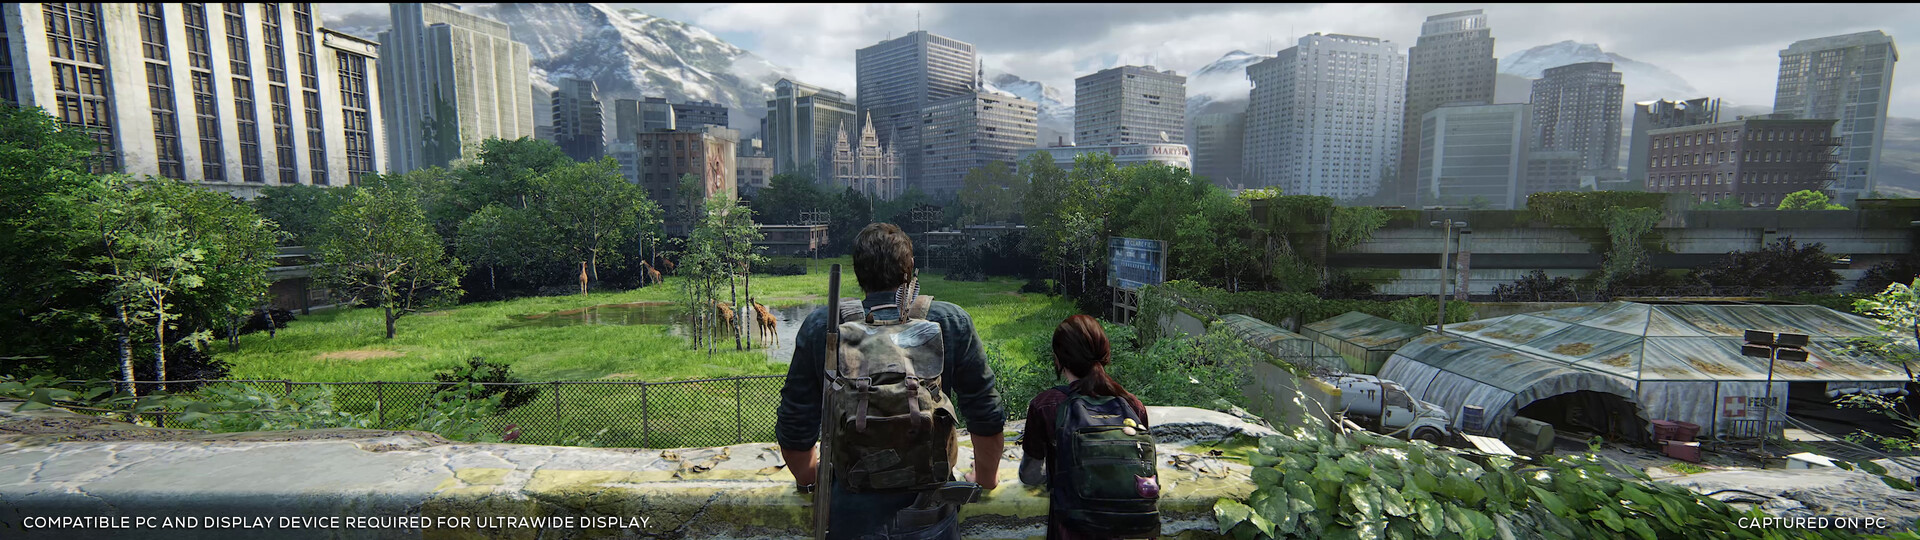 PS4 The Last of Us Remastered Korean Version 라스트 오브 어스